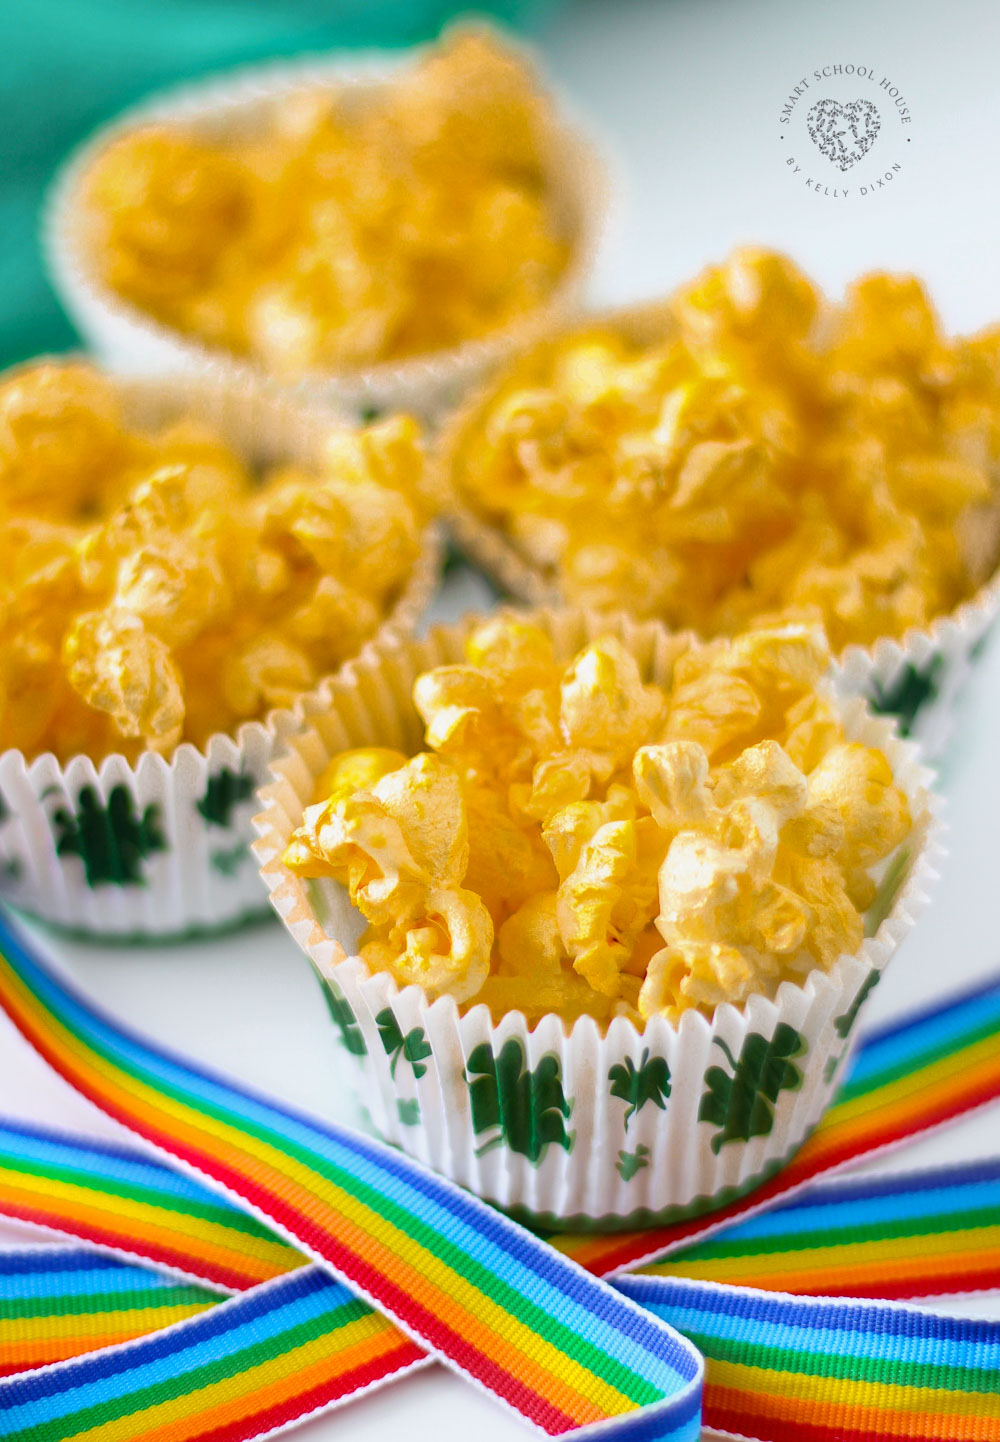 Gold Popcorn for St. Patrick's Day! Sparkly golden popcorn made with edible gold spray. #StPatricksDay #Popcron #RainbowCrafts